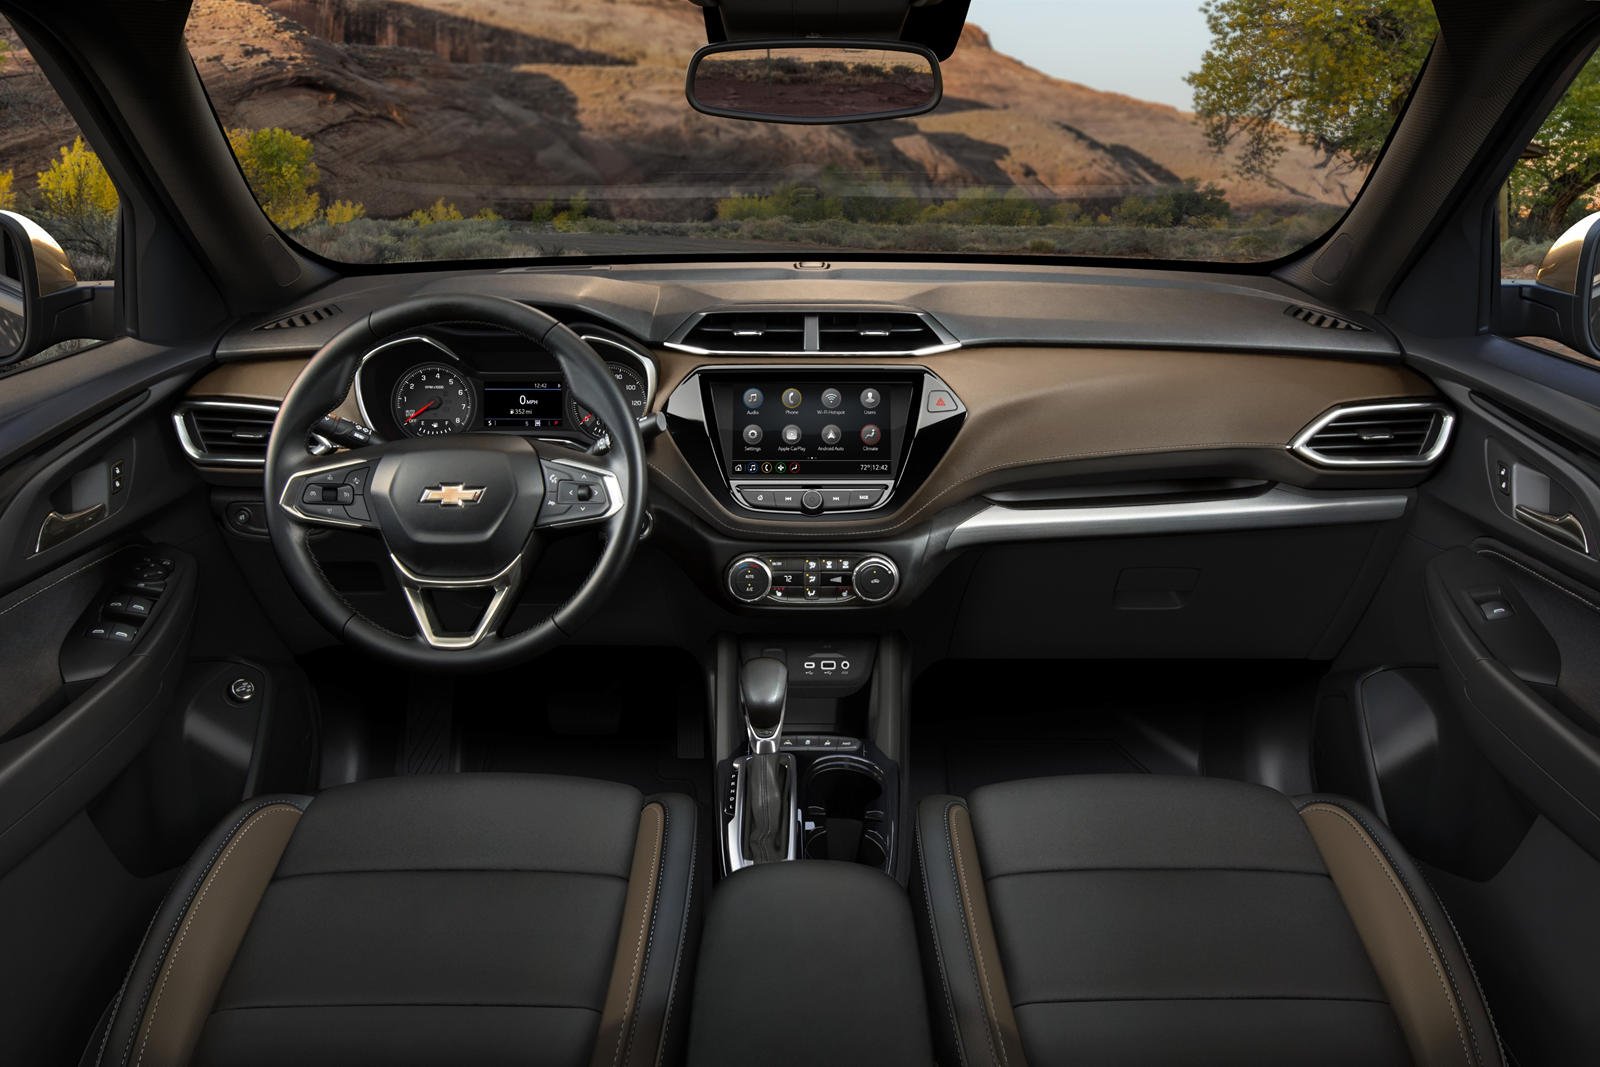 Chevrolet Trailblazer interior - Cockpit